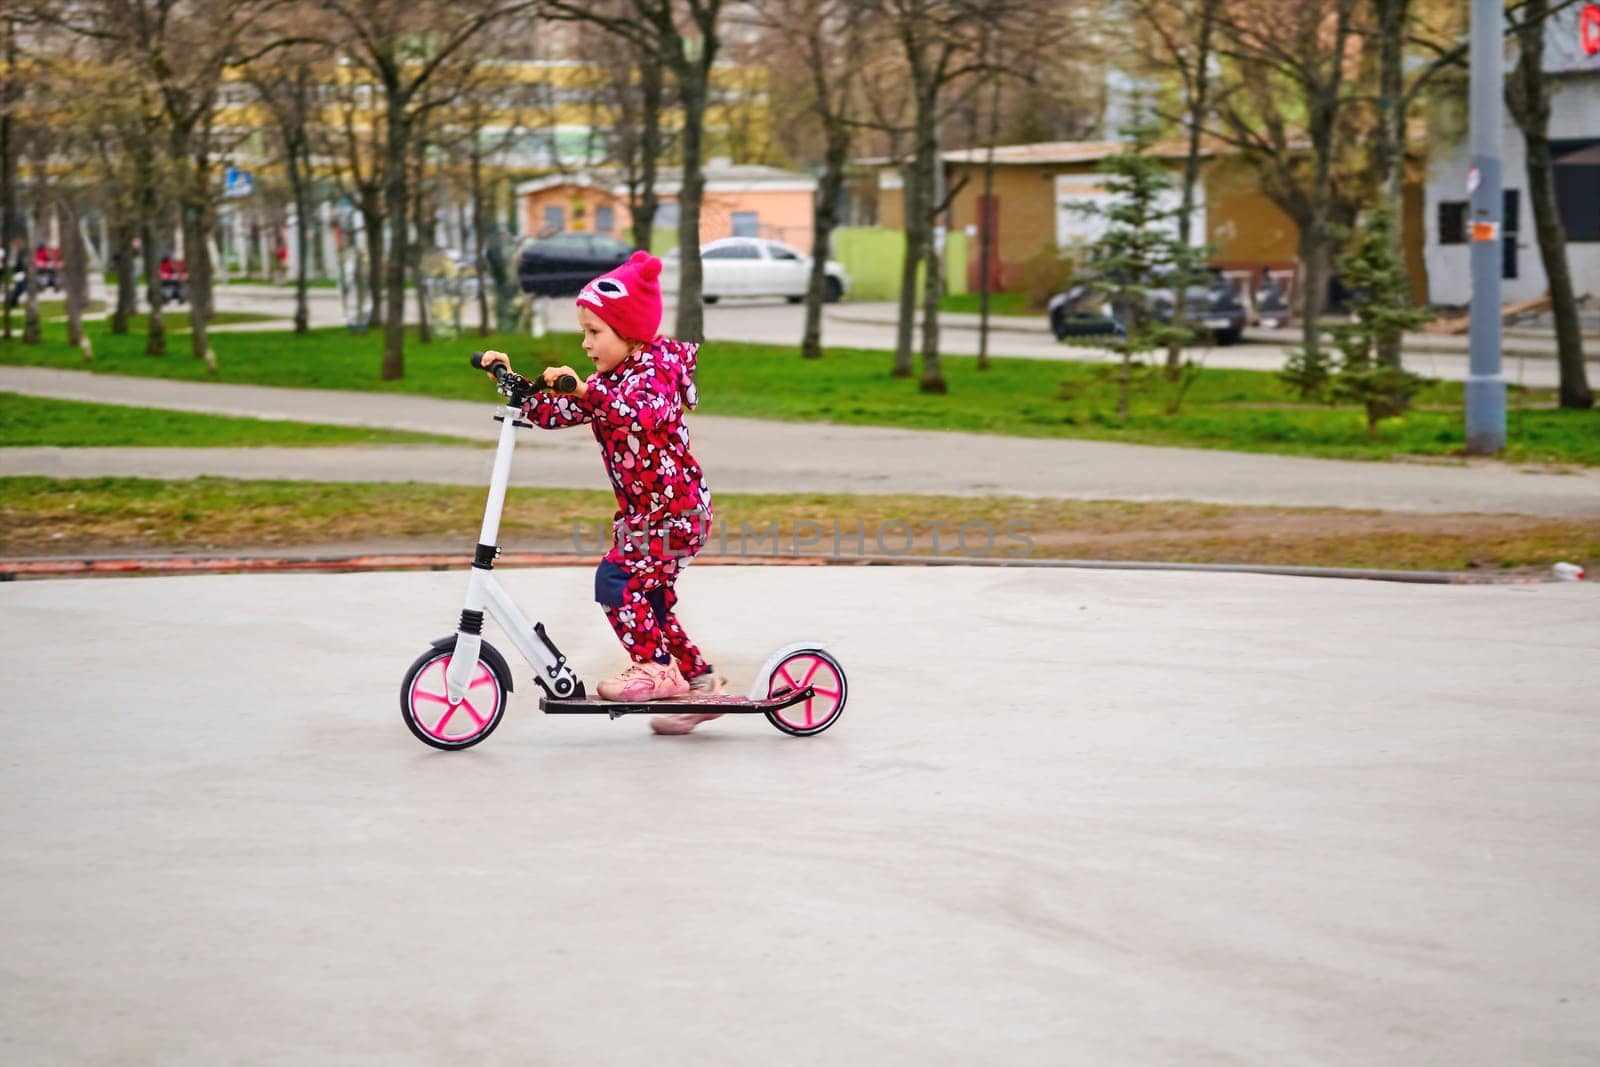 Joyful active child rides a pink scooter in a city park by jovani68